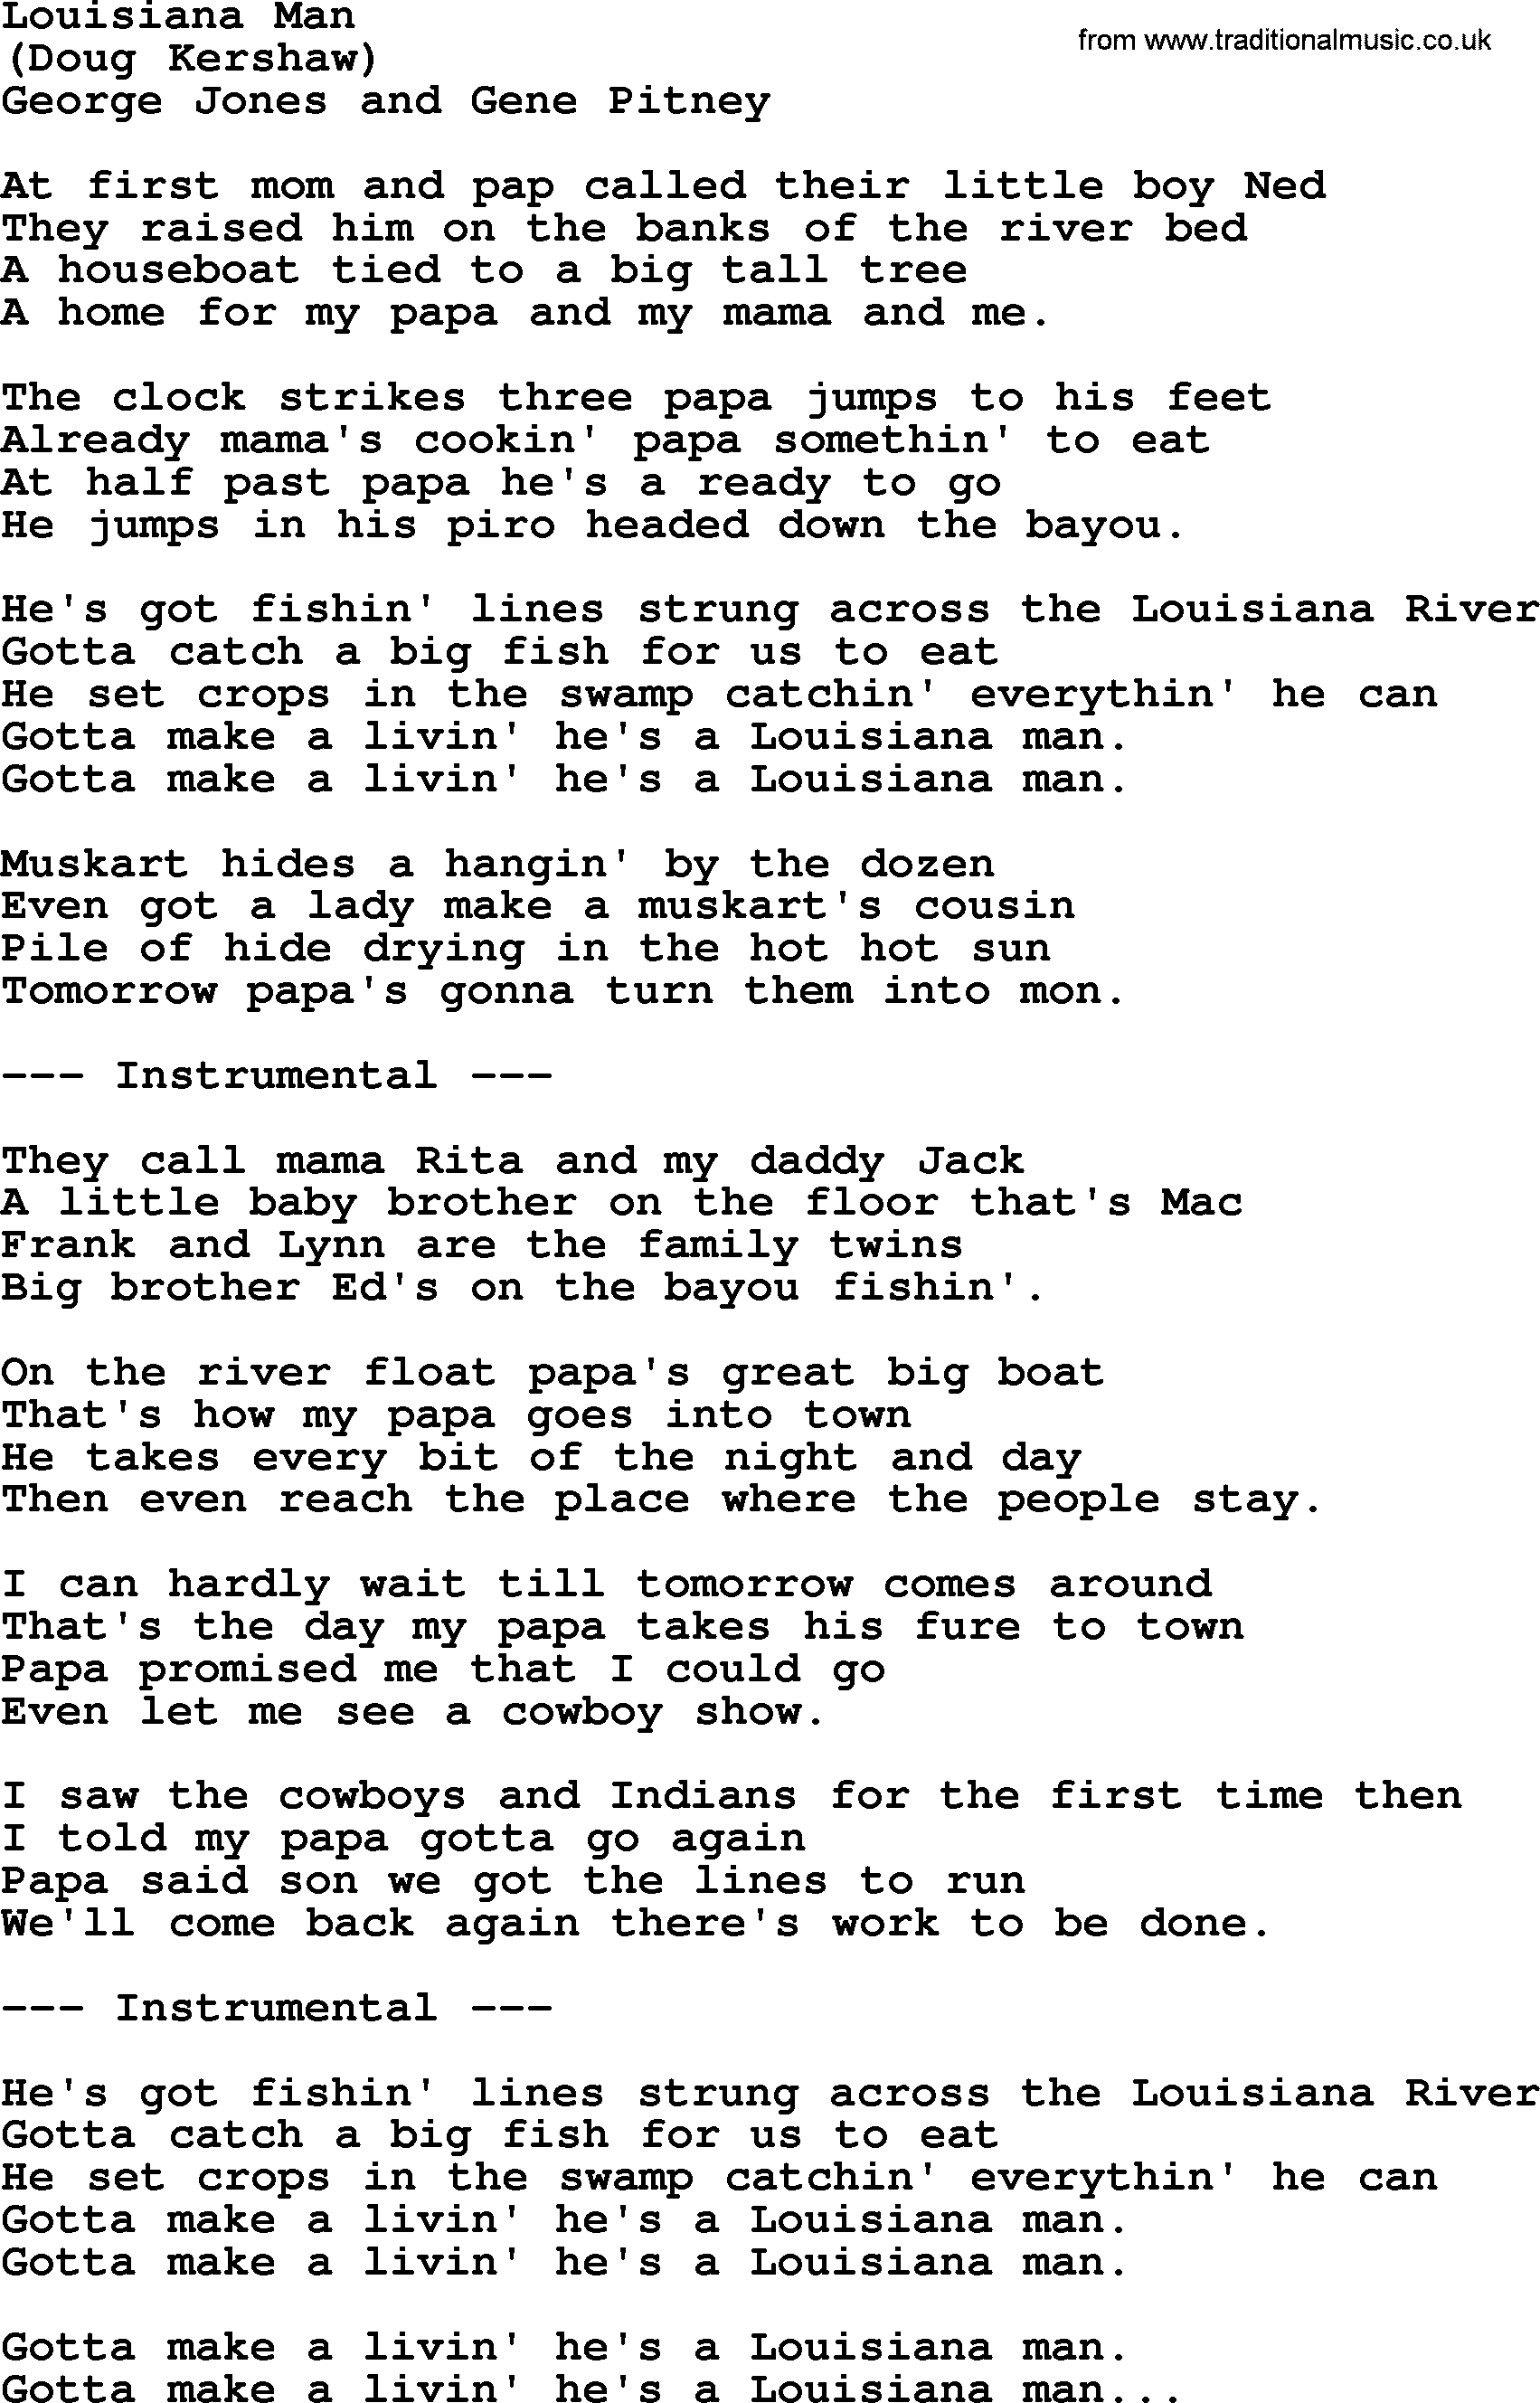 George Jones song: Louisiana Man, lyrics